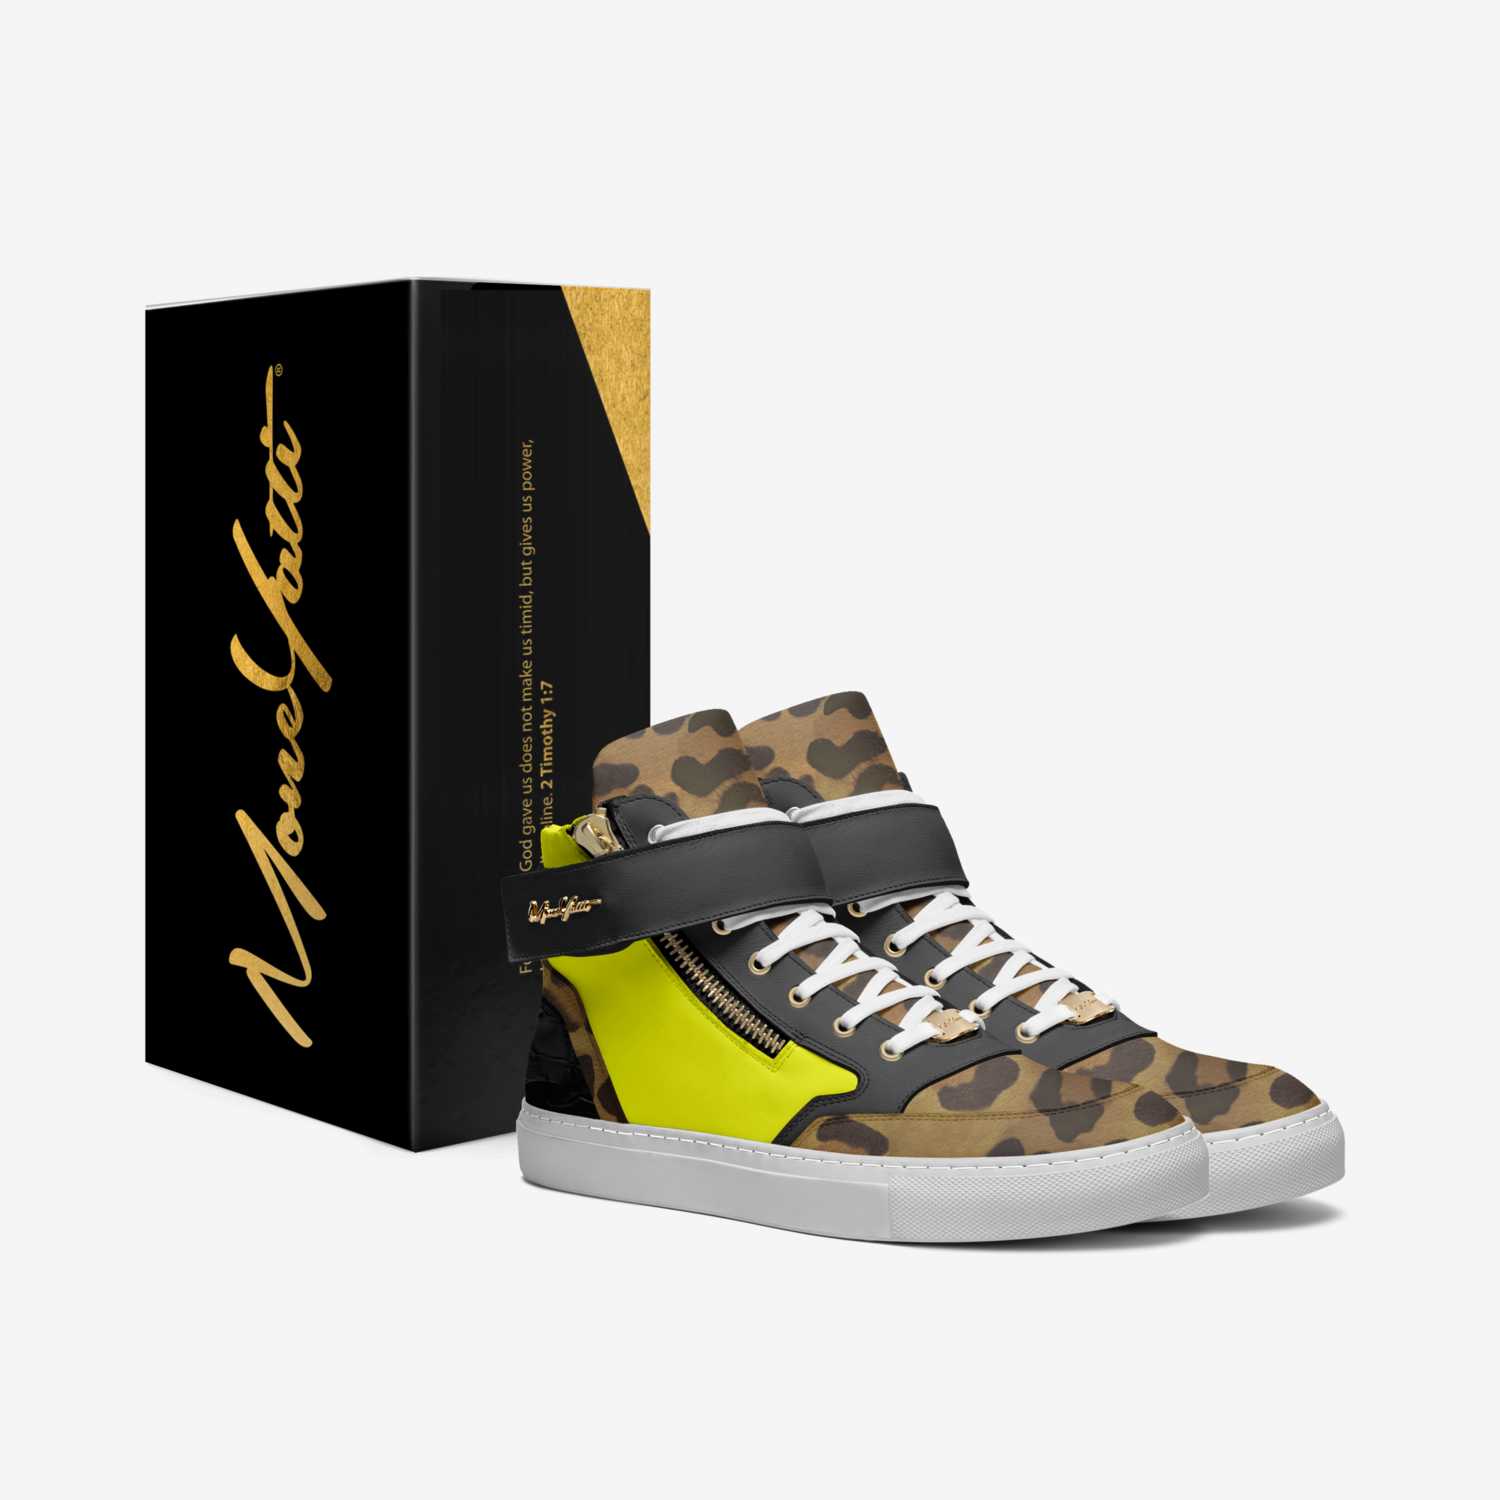 MONEYATTI CLS2W custom made in Italy shoes by Moneyatti Brand | Box view